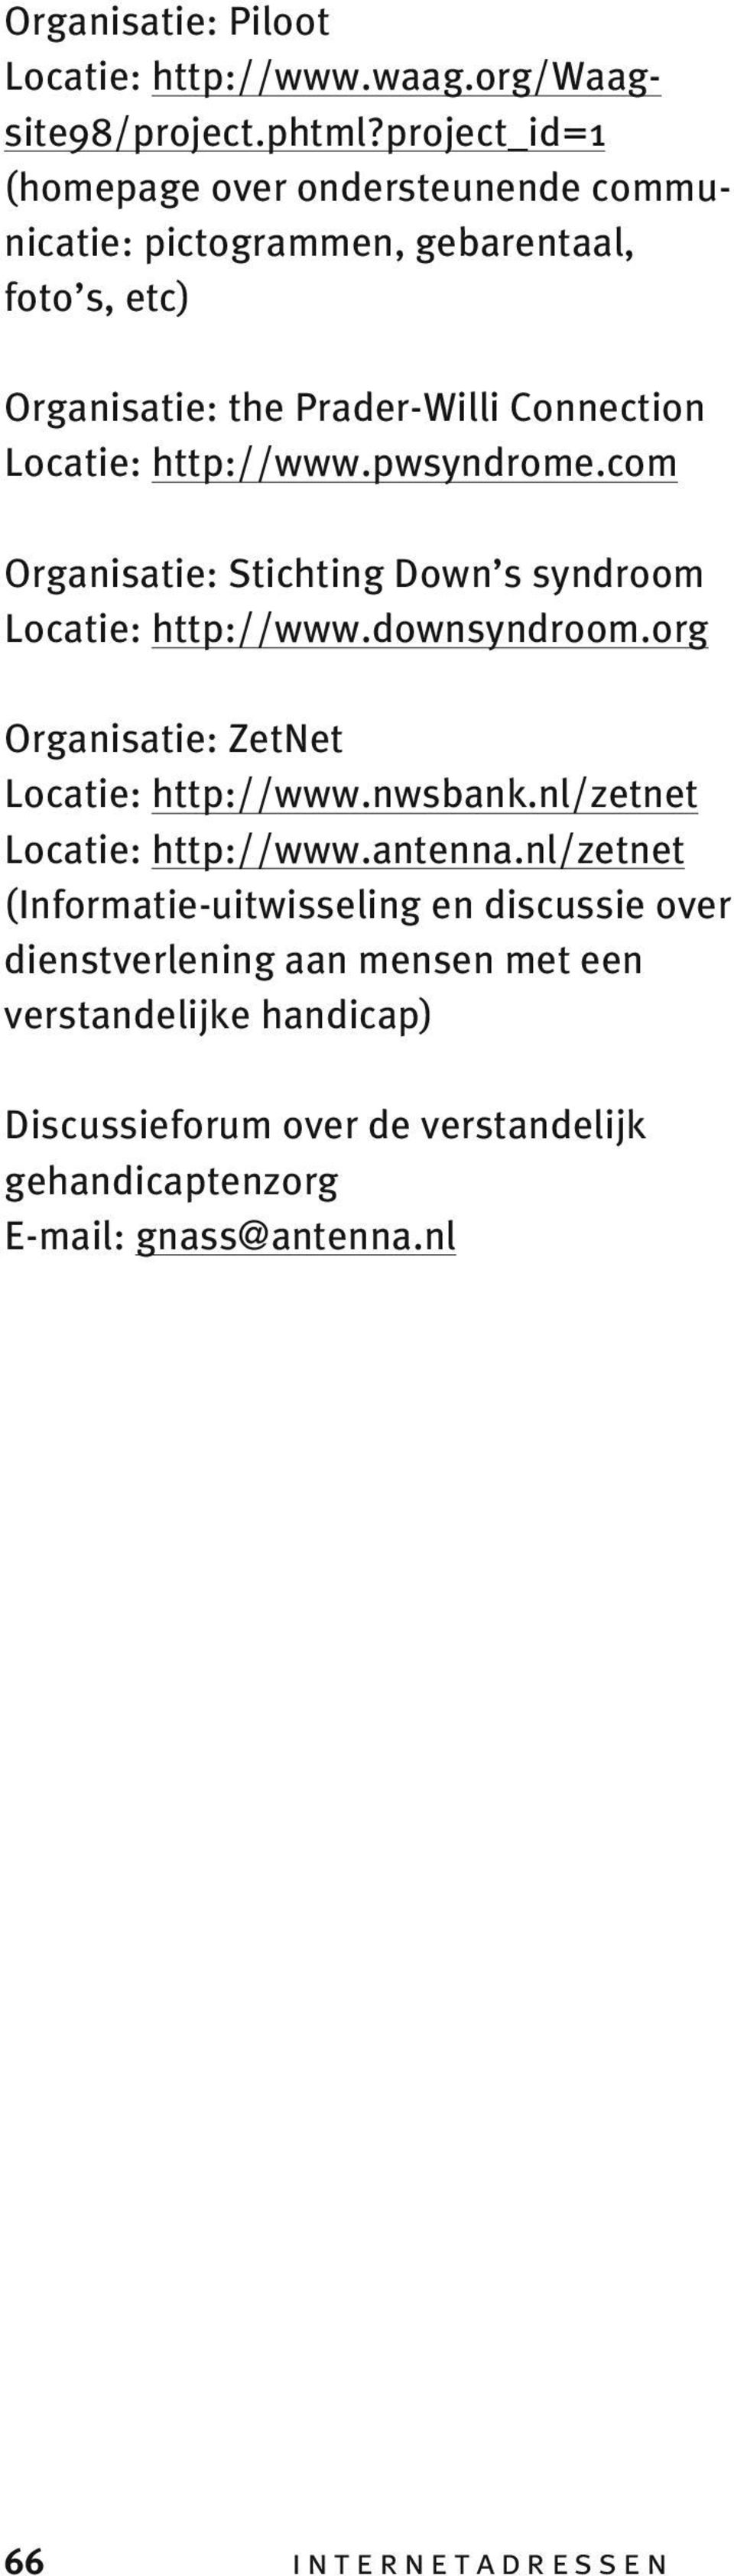 http://www.pwsyndrome.com Organisatie: Stichting Down s syndroom Locatie: http://www.downsyndroom.org Organisatie: ZetNet Locatie: http://www.nwsbank.